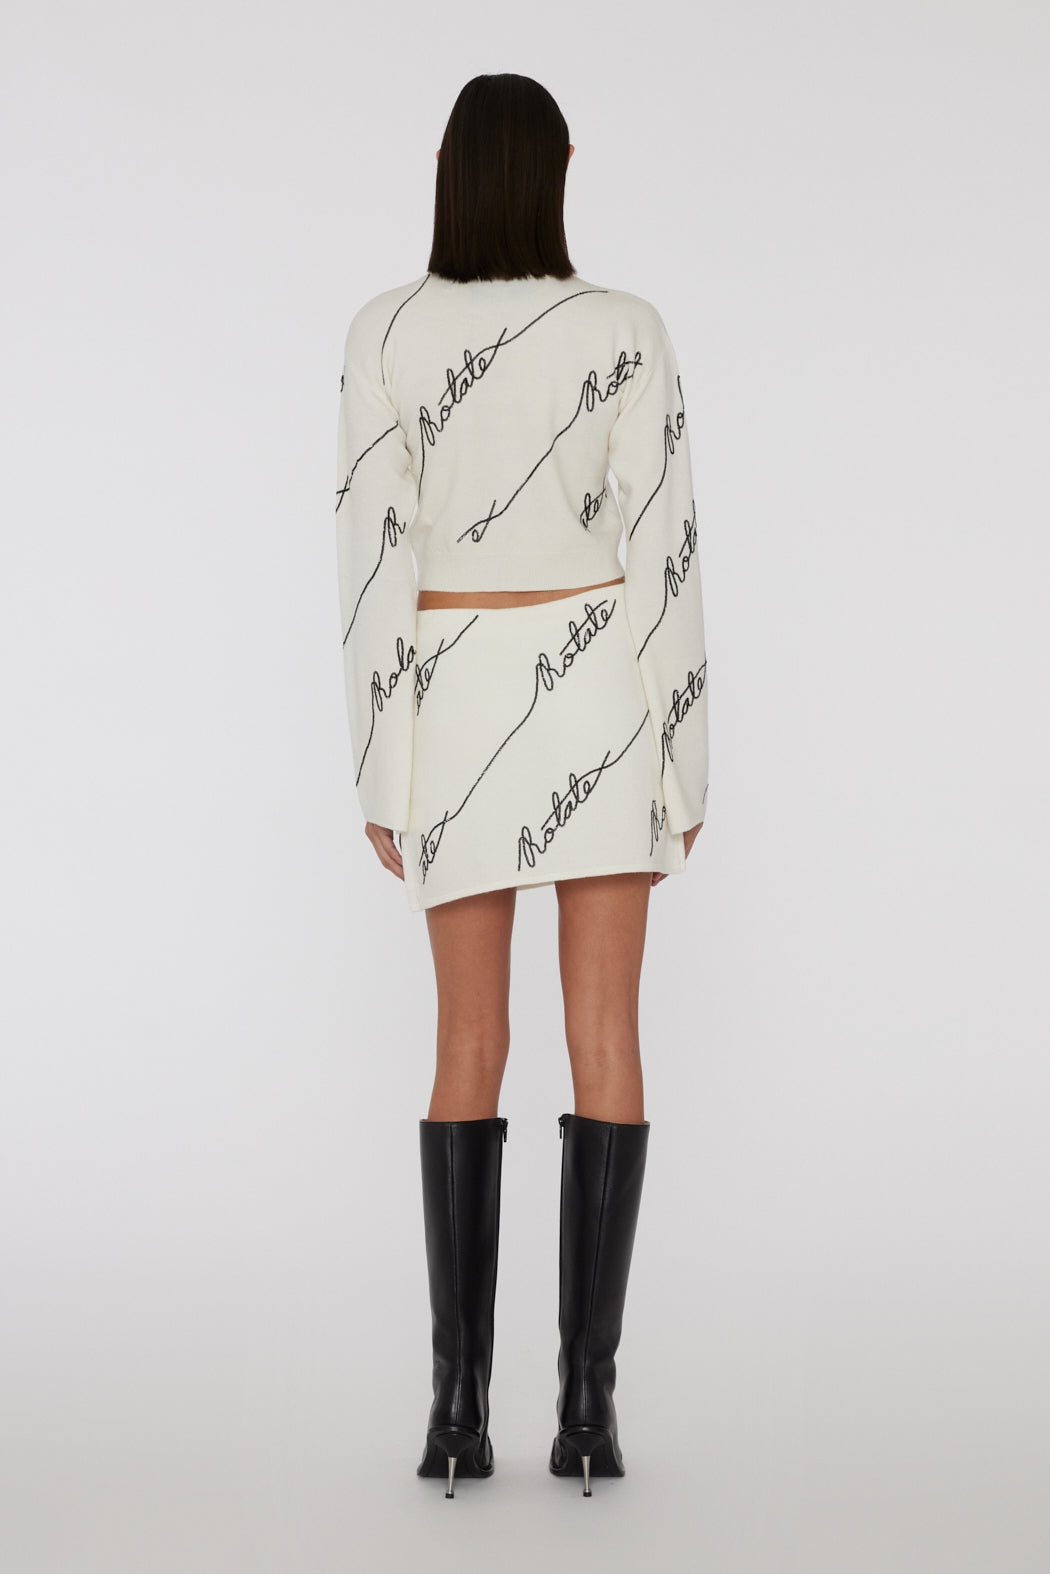 Sequin logo sweater - cannoli cream Jumpers ROTATE - BIRGER